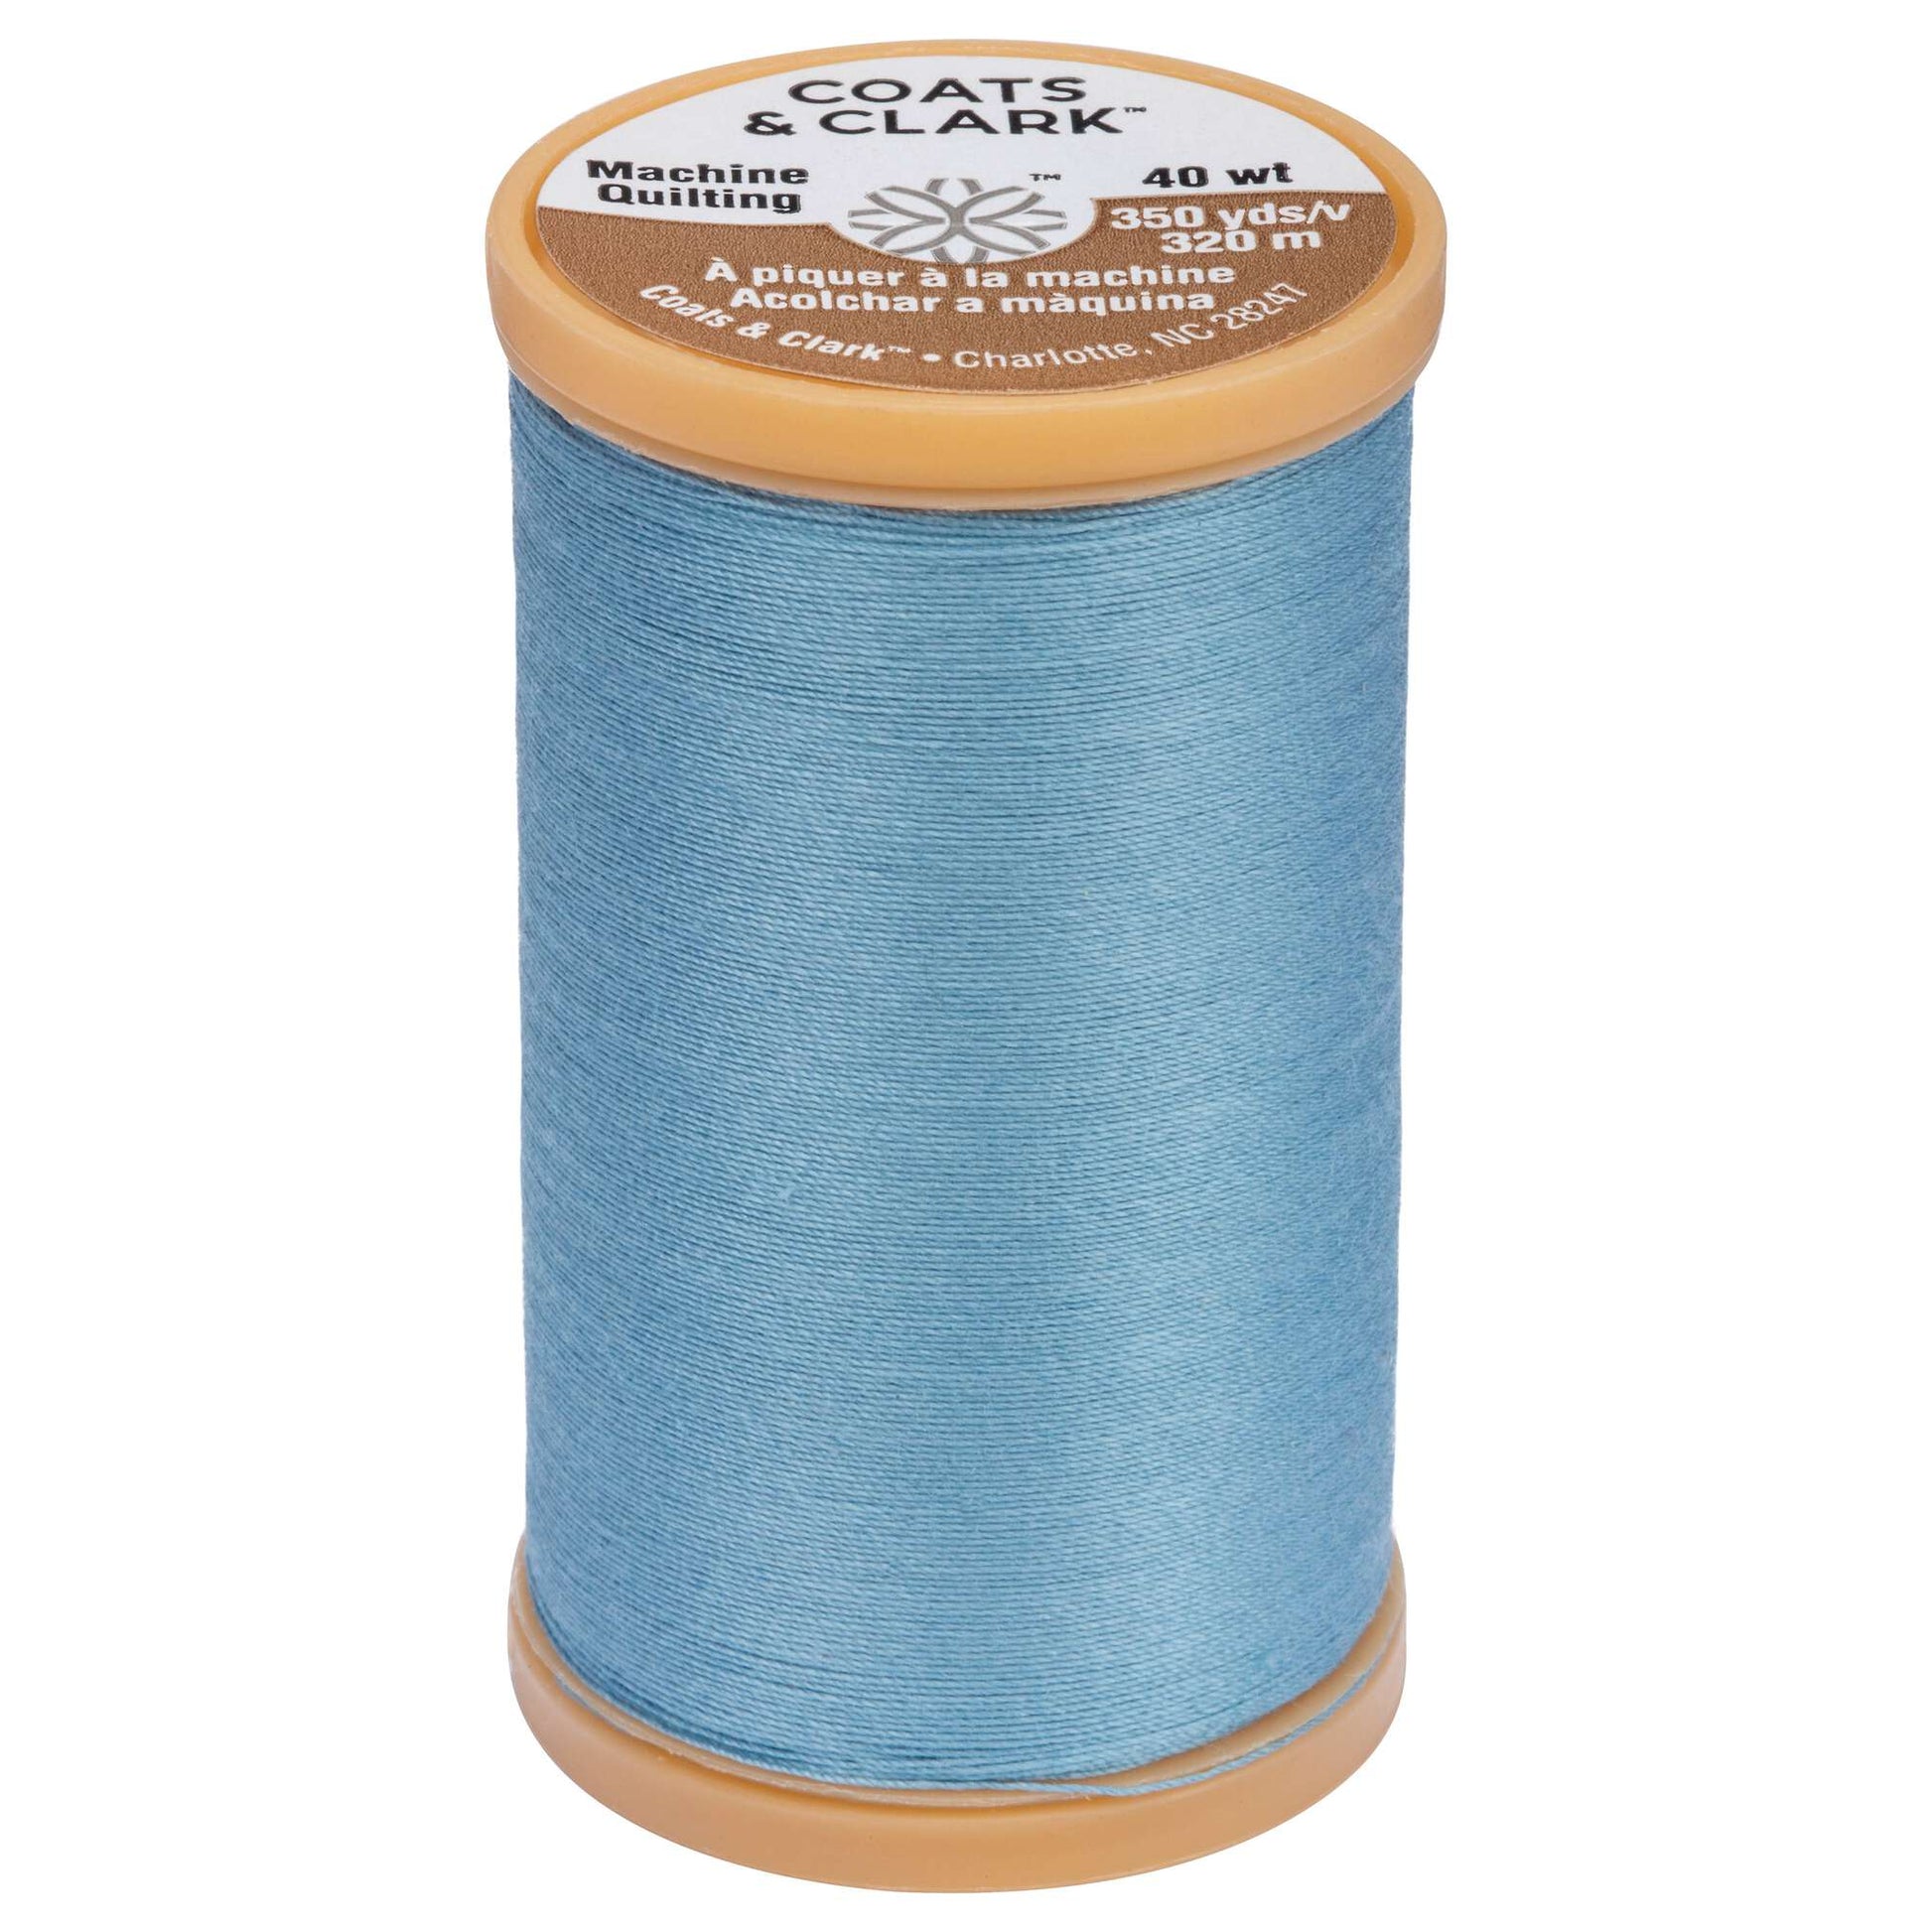 Coats & Clark Cotton Machine Quilting Thread (350 Yards) Blue